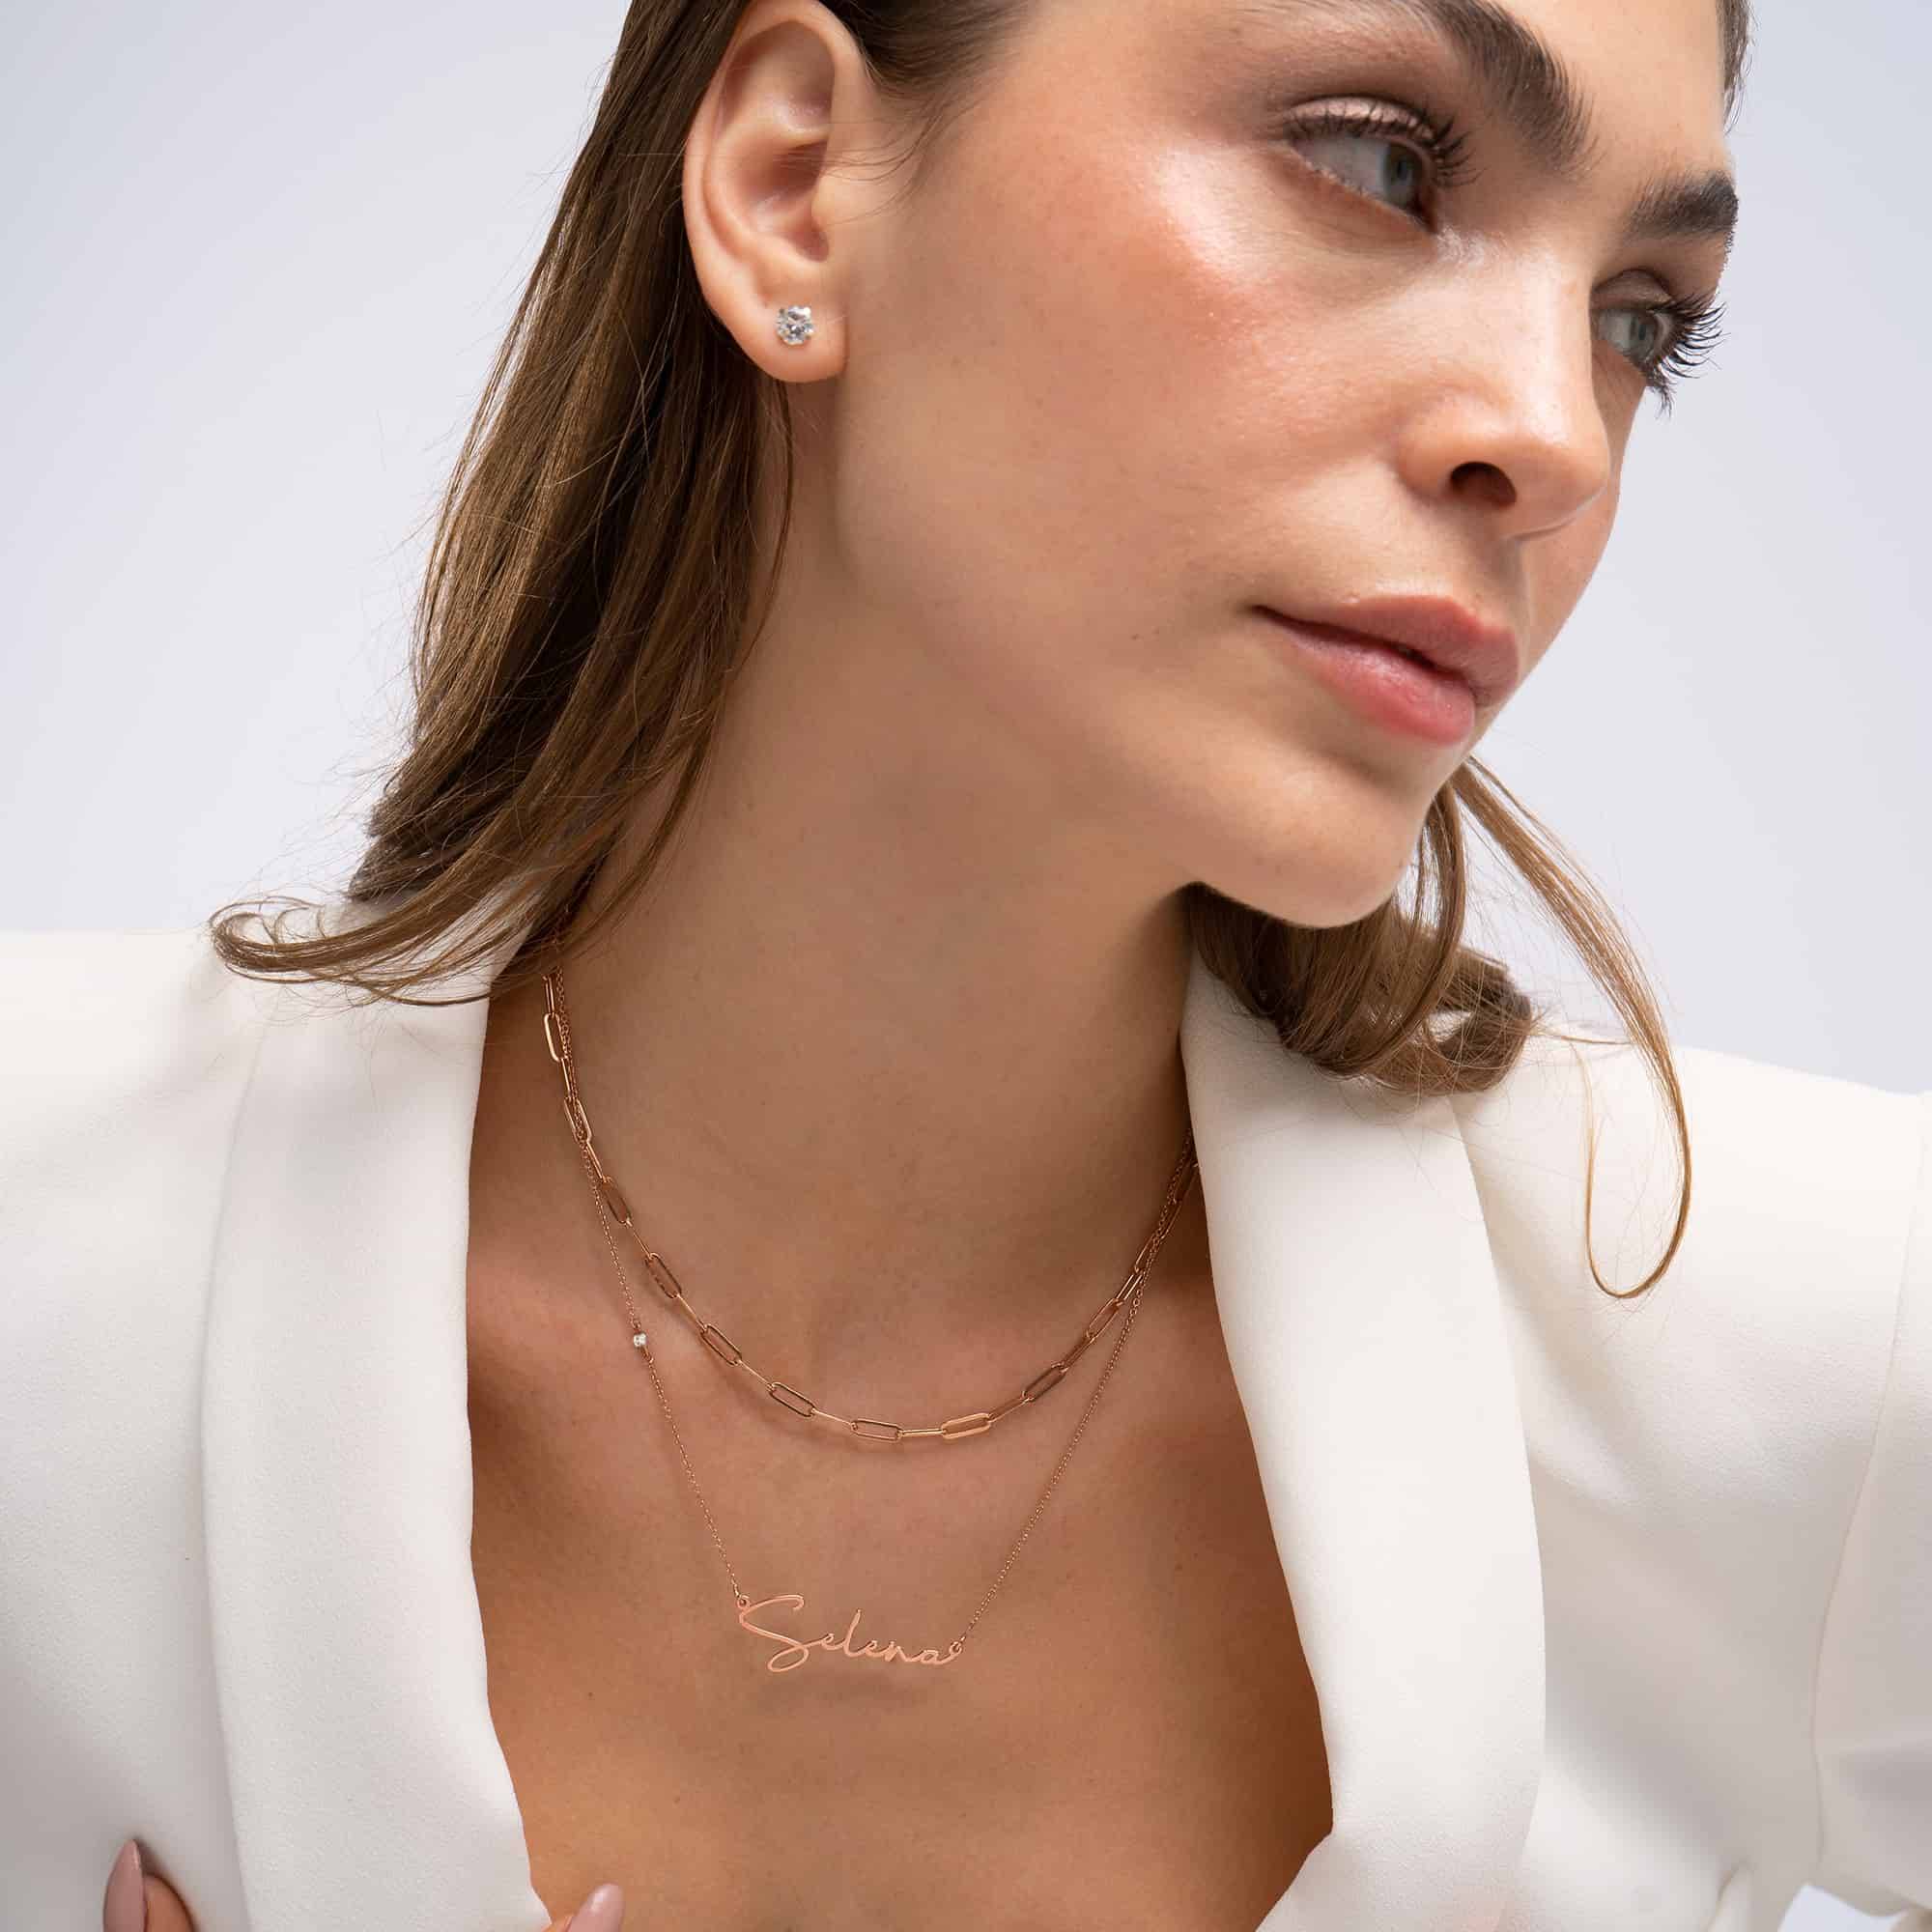 Paris Name Necklace with Diamonds - Rose Gold Vermeil-2 product photo